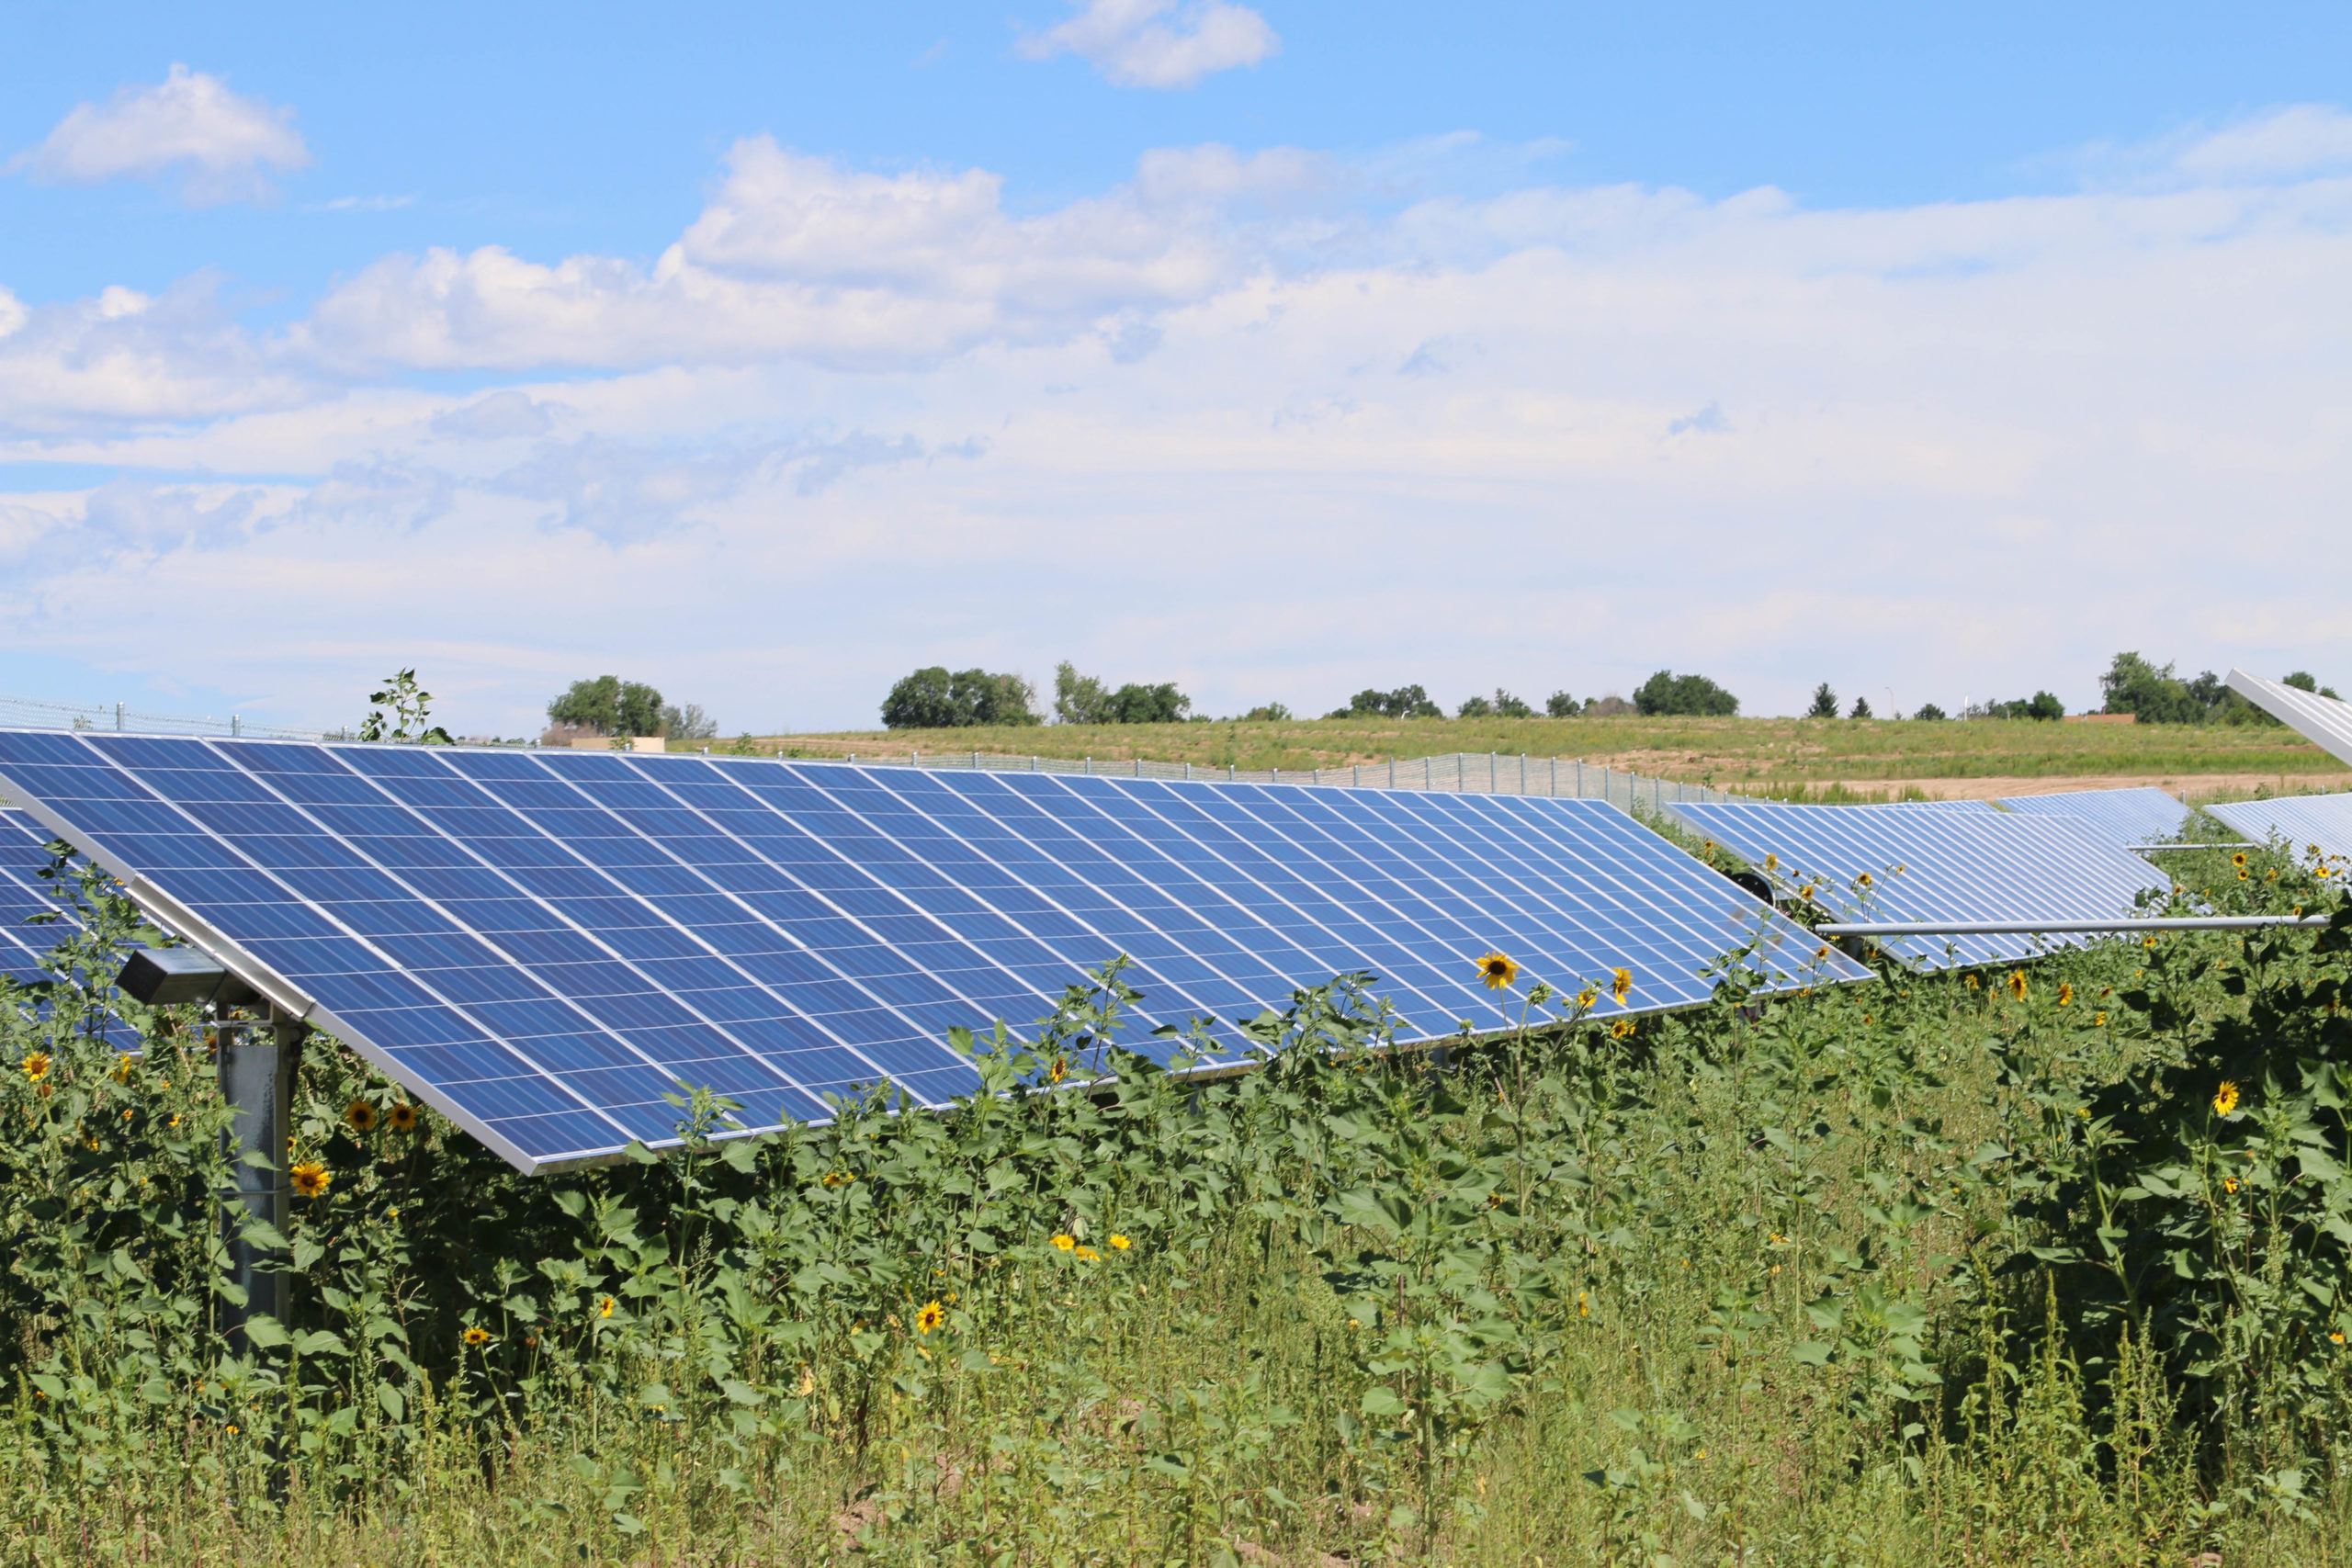 Agrivoltaics: Solar plus farm production is gaining ground